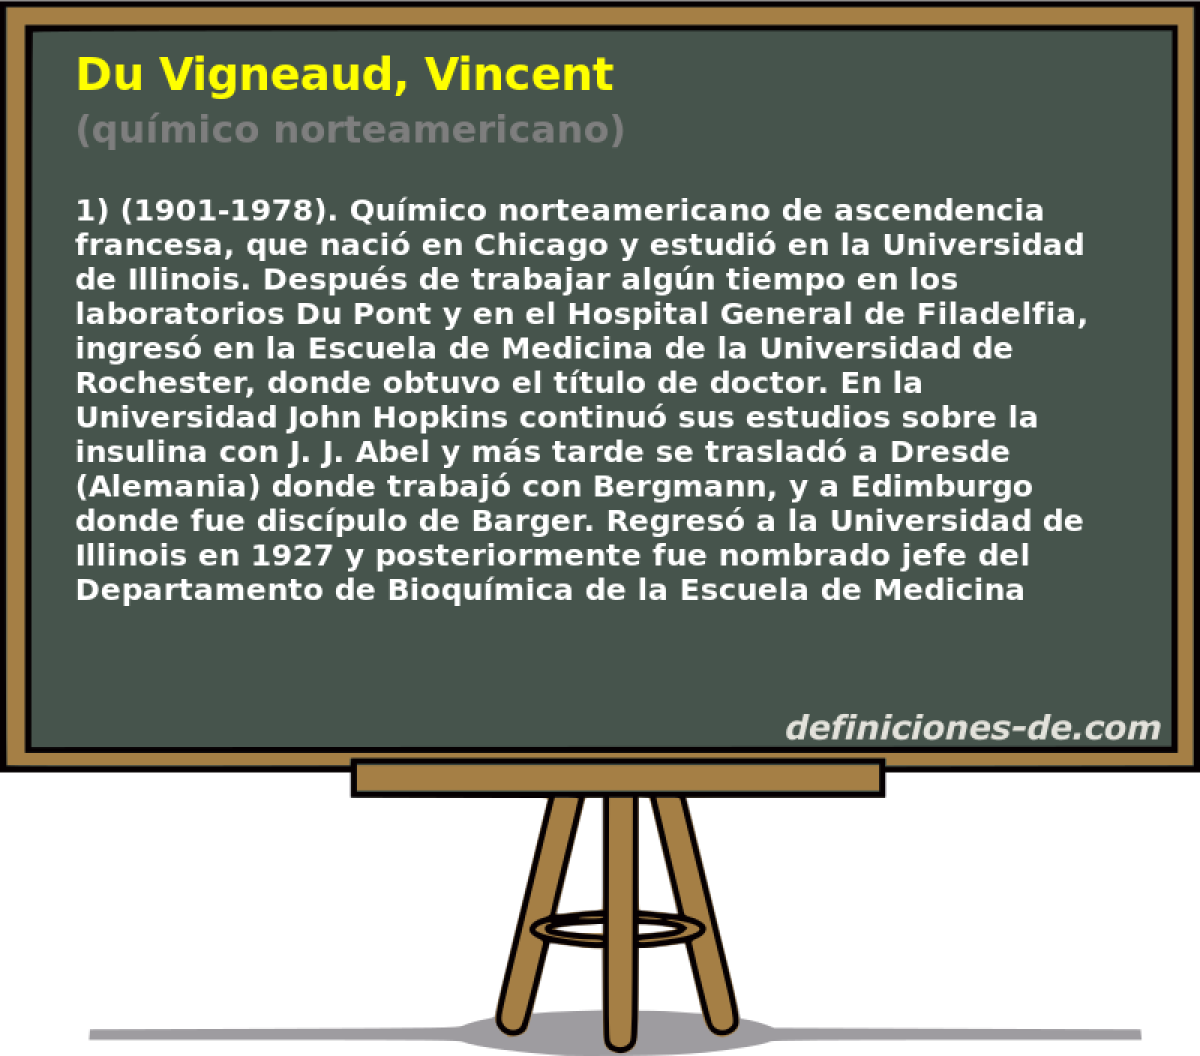 Du Vigneaud, Vincent (qumico norteamericano)